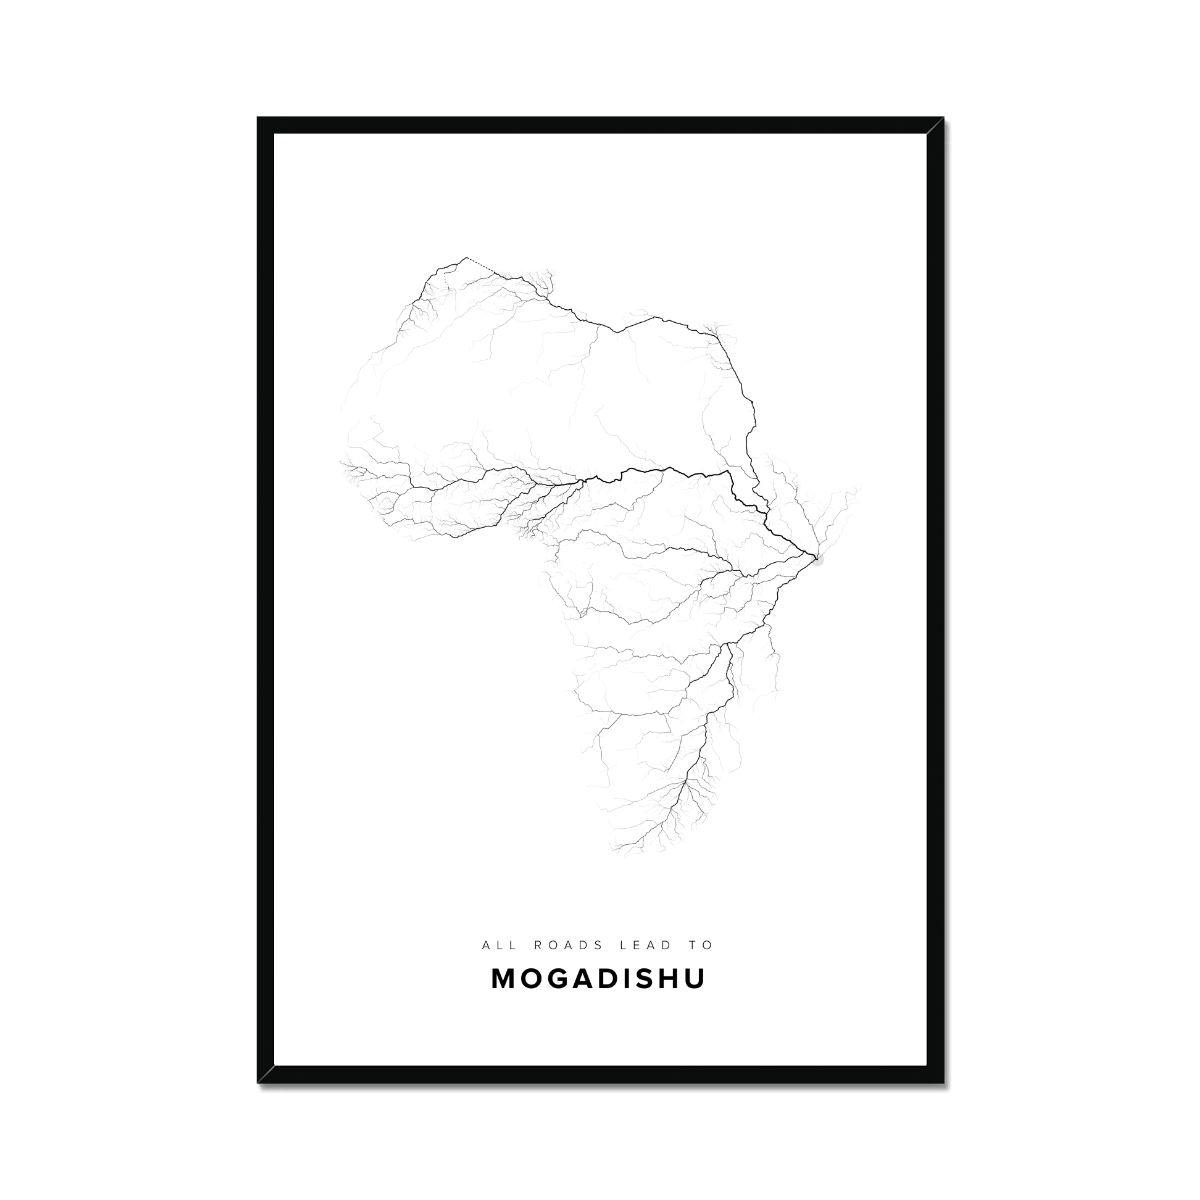 All roads lead to Mogadishu (Somalia) Fine Art Map Print